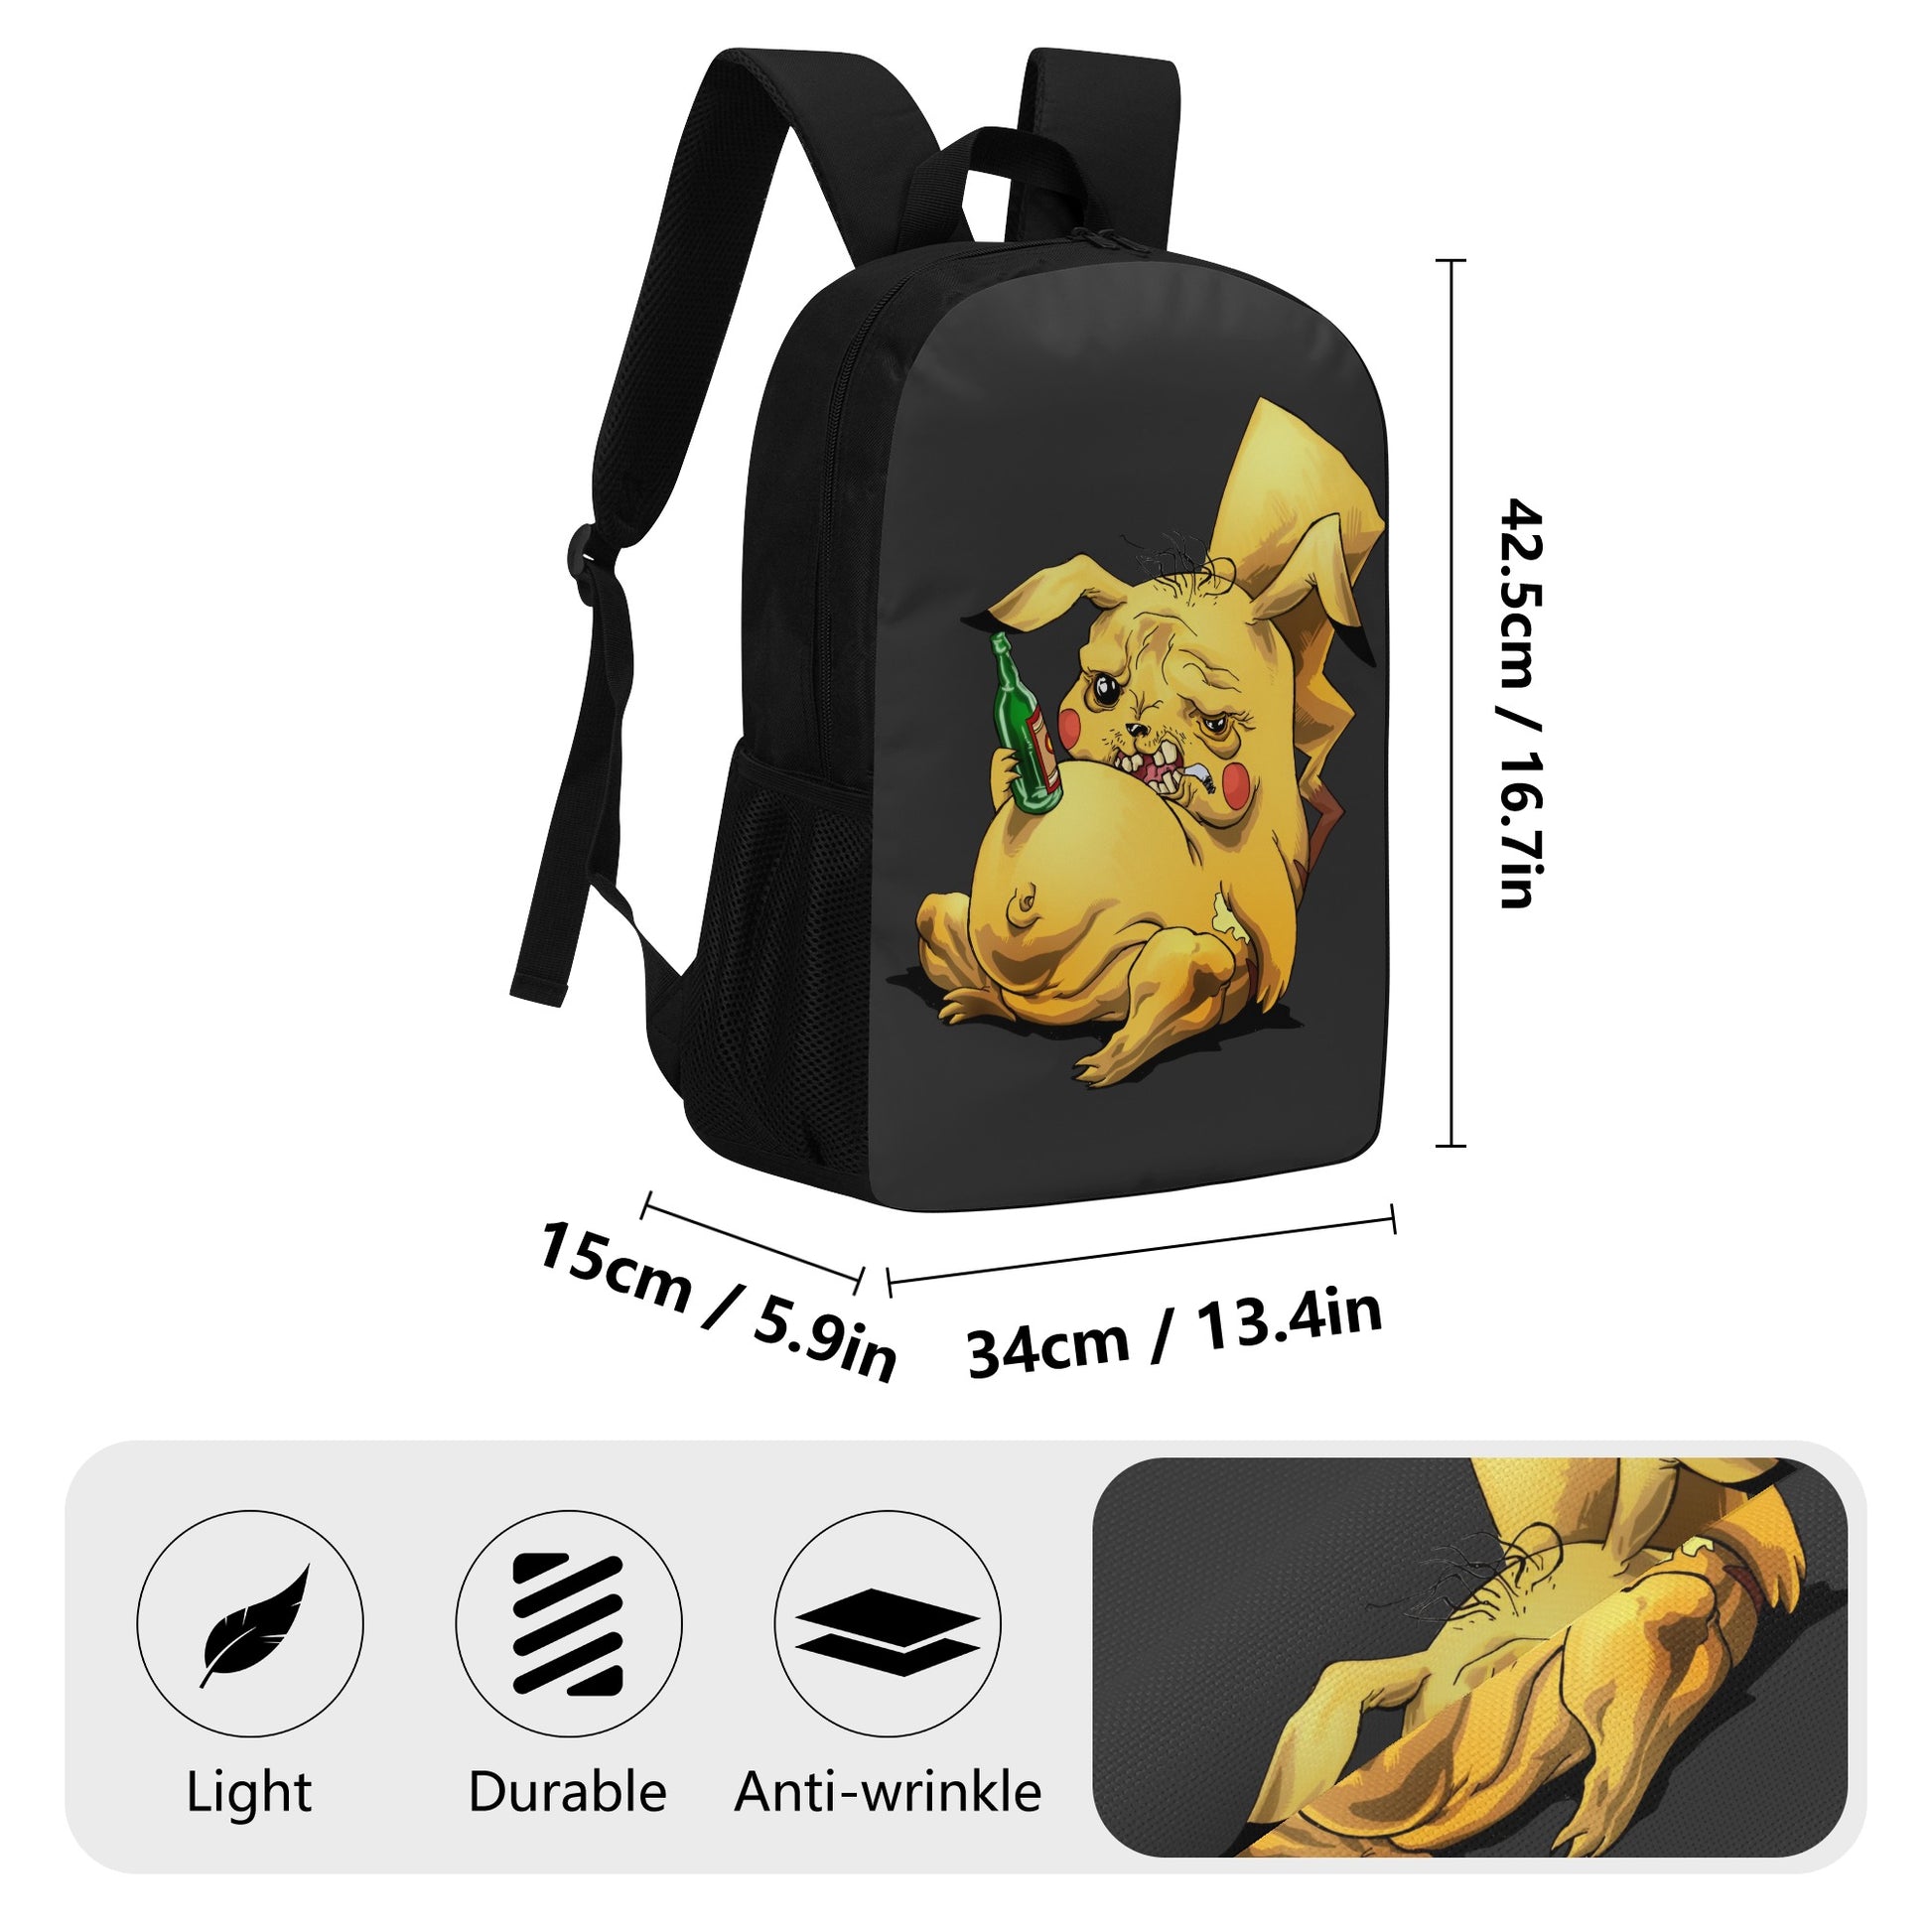 Backpack Laptop Drunk Pikachu DrinkandArt